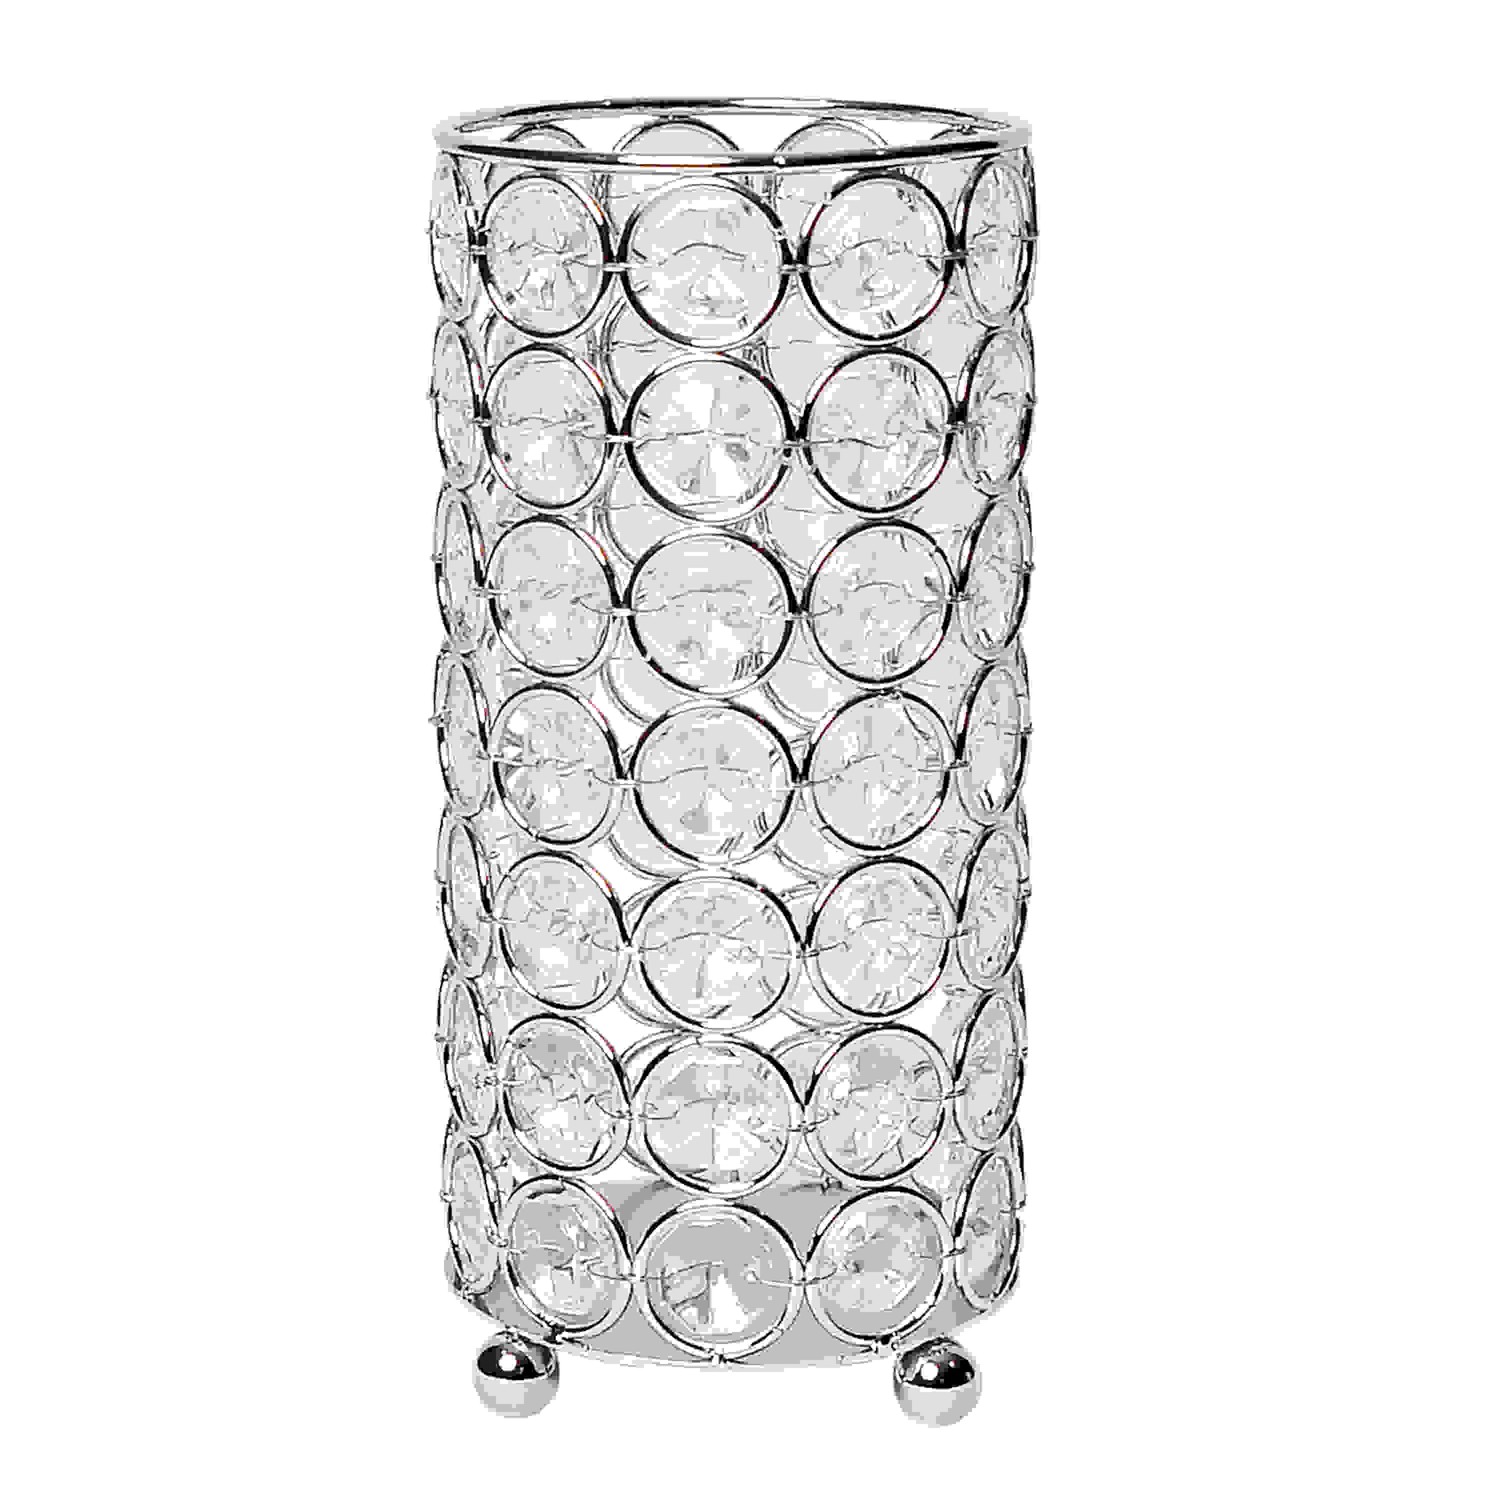 Elegant Designs Elipse Crystal Decorative Flower Vase, Candle Holder, Wedding Centerpiece, 6.75 Inch, Chrome